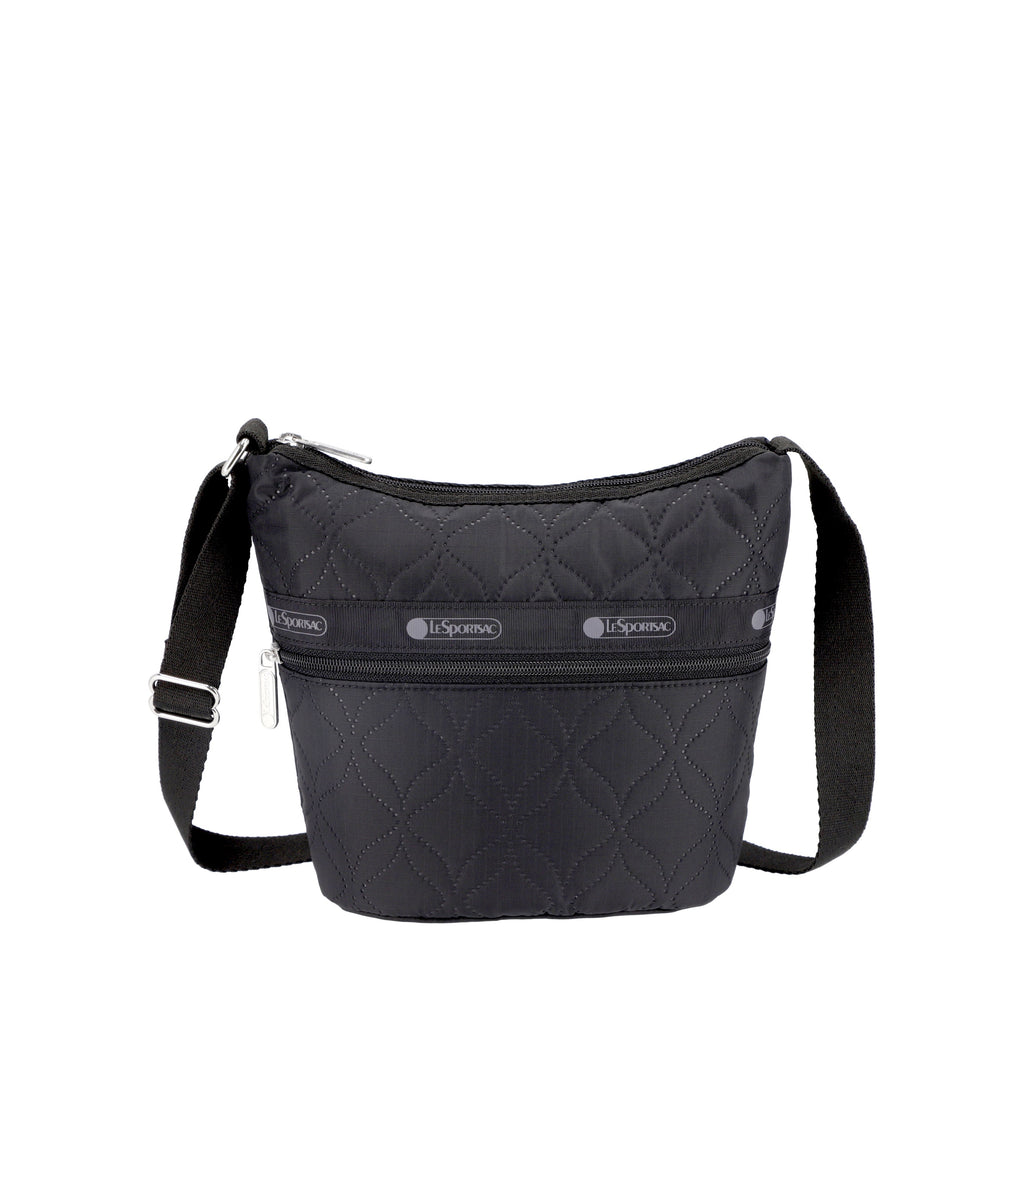 Black Leather Bucket Handbags Wide Strap Shoulder Bags